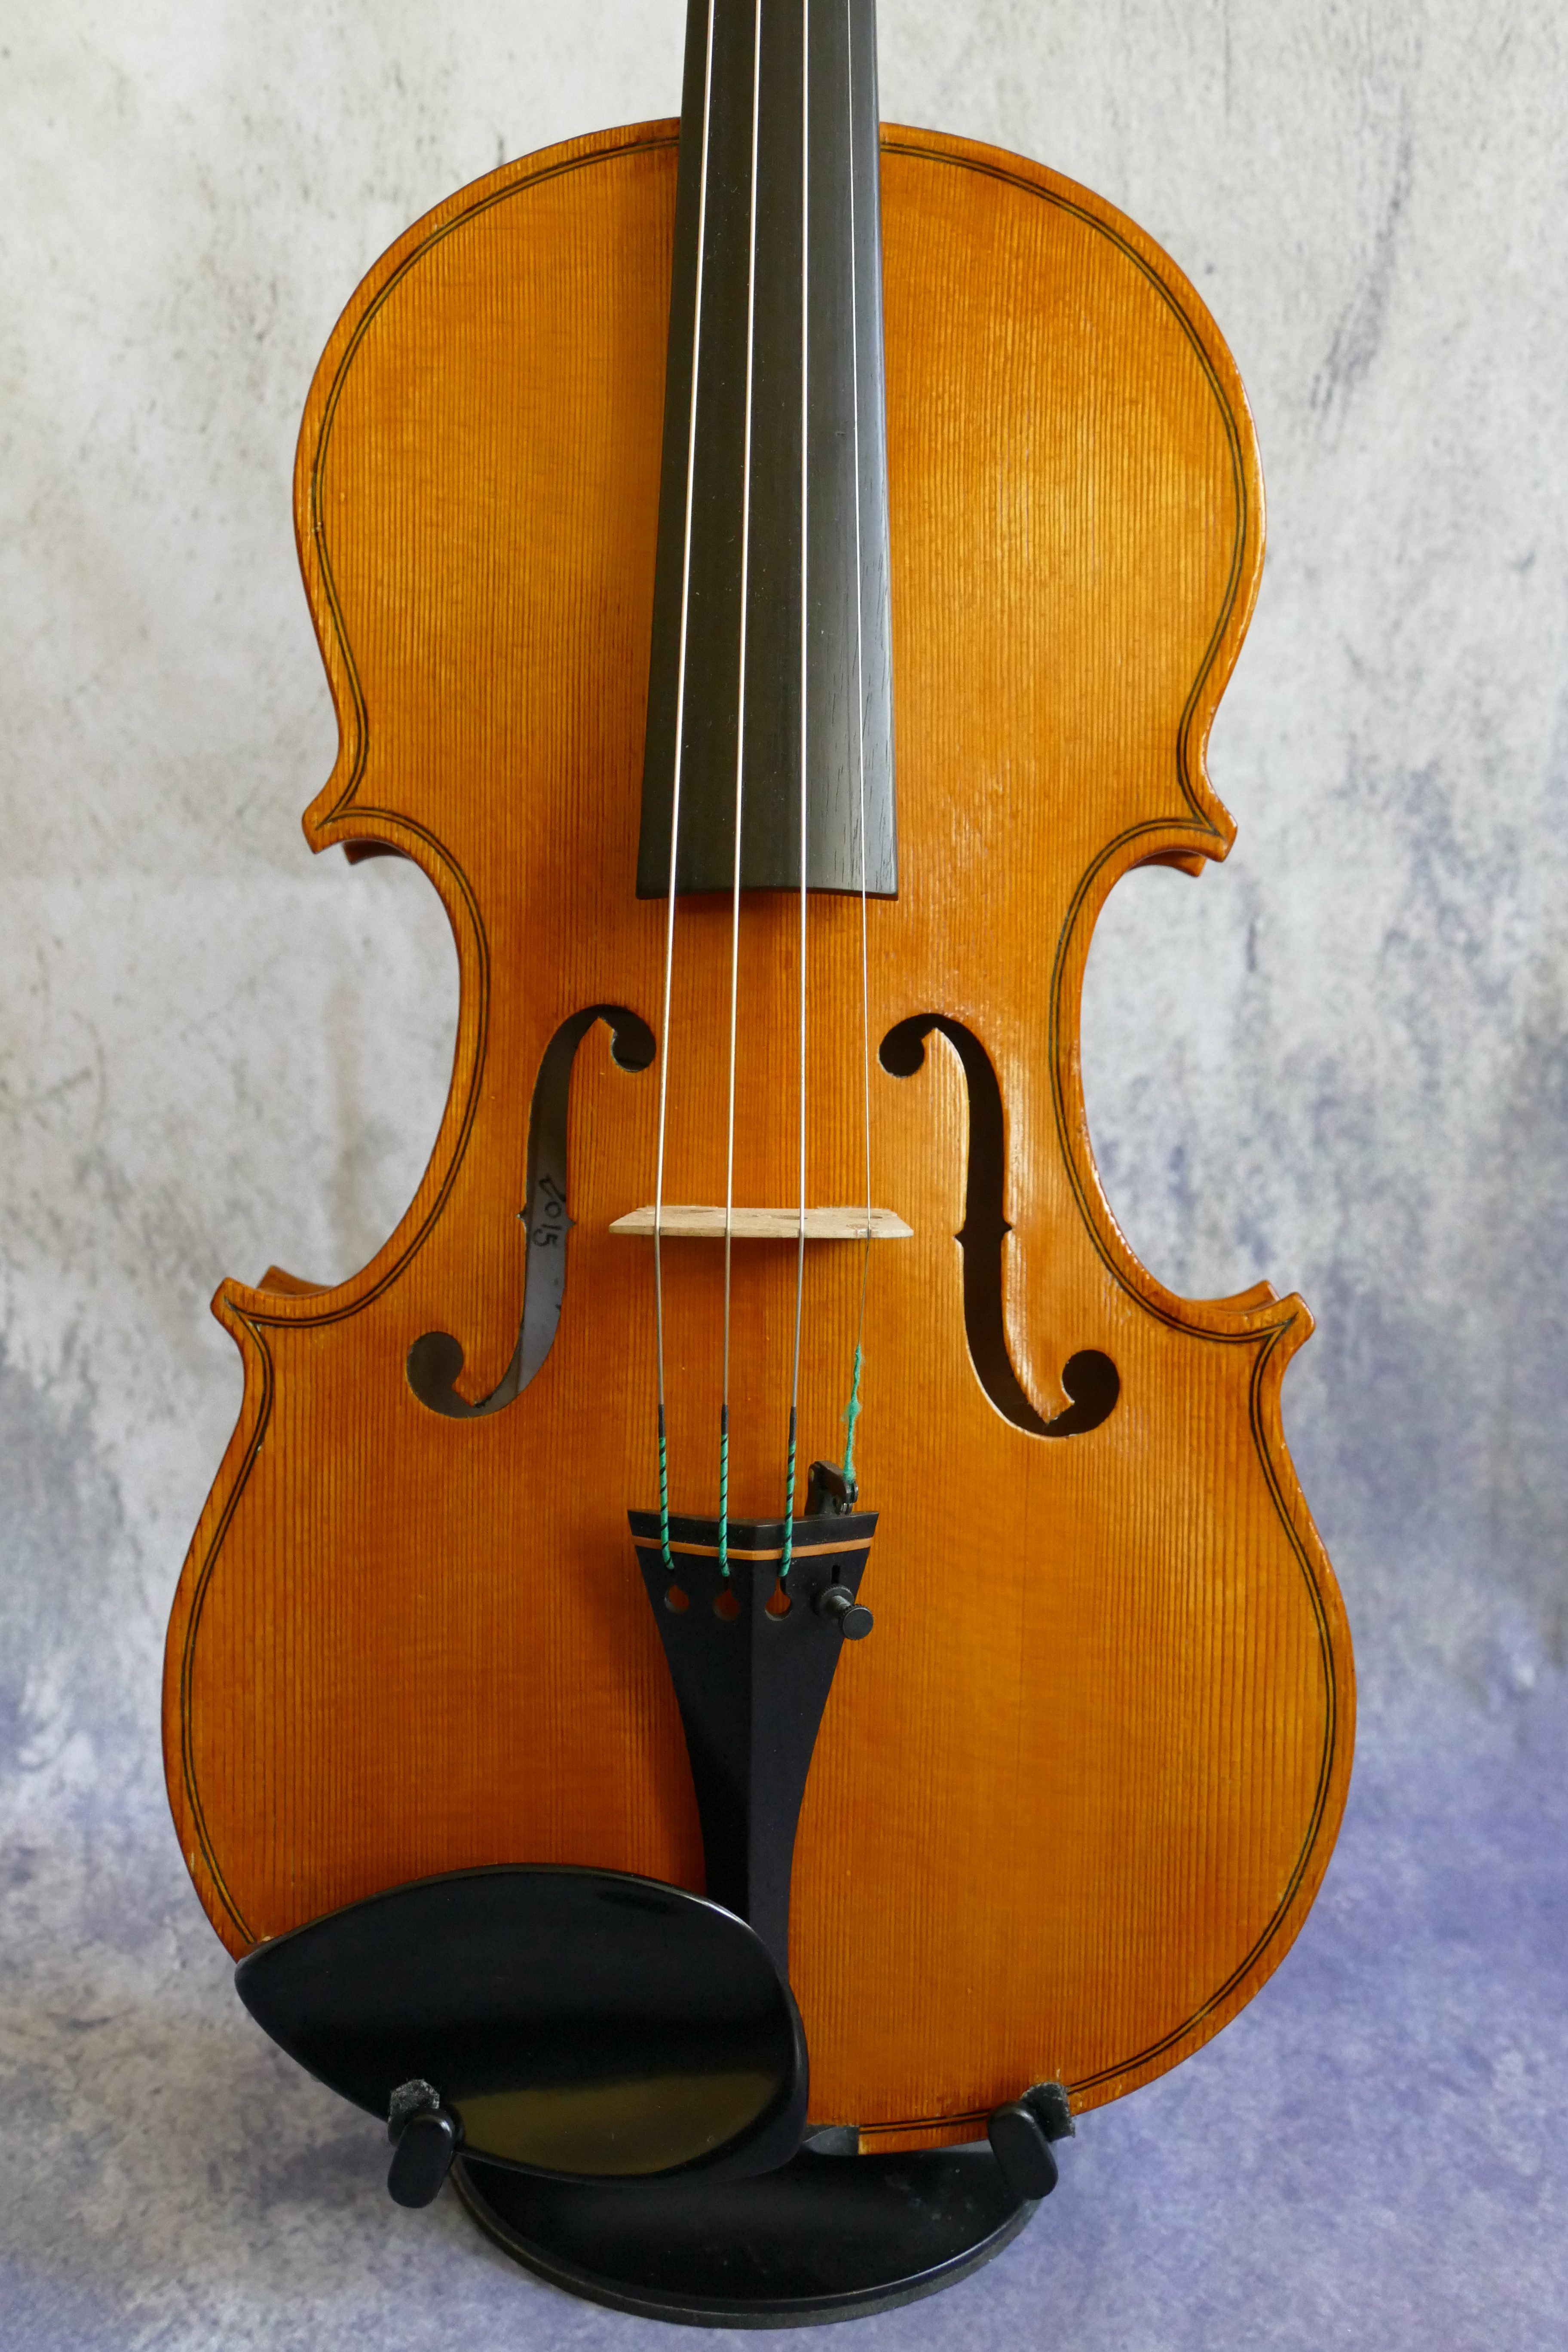 Violon d’après A.Stradivari “Maurin” 1718 – 2015